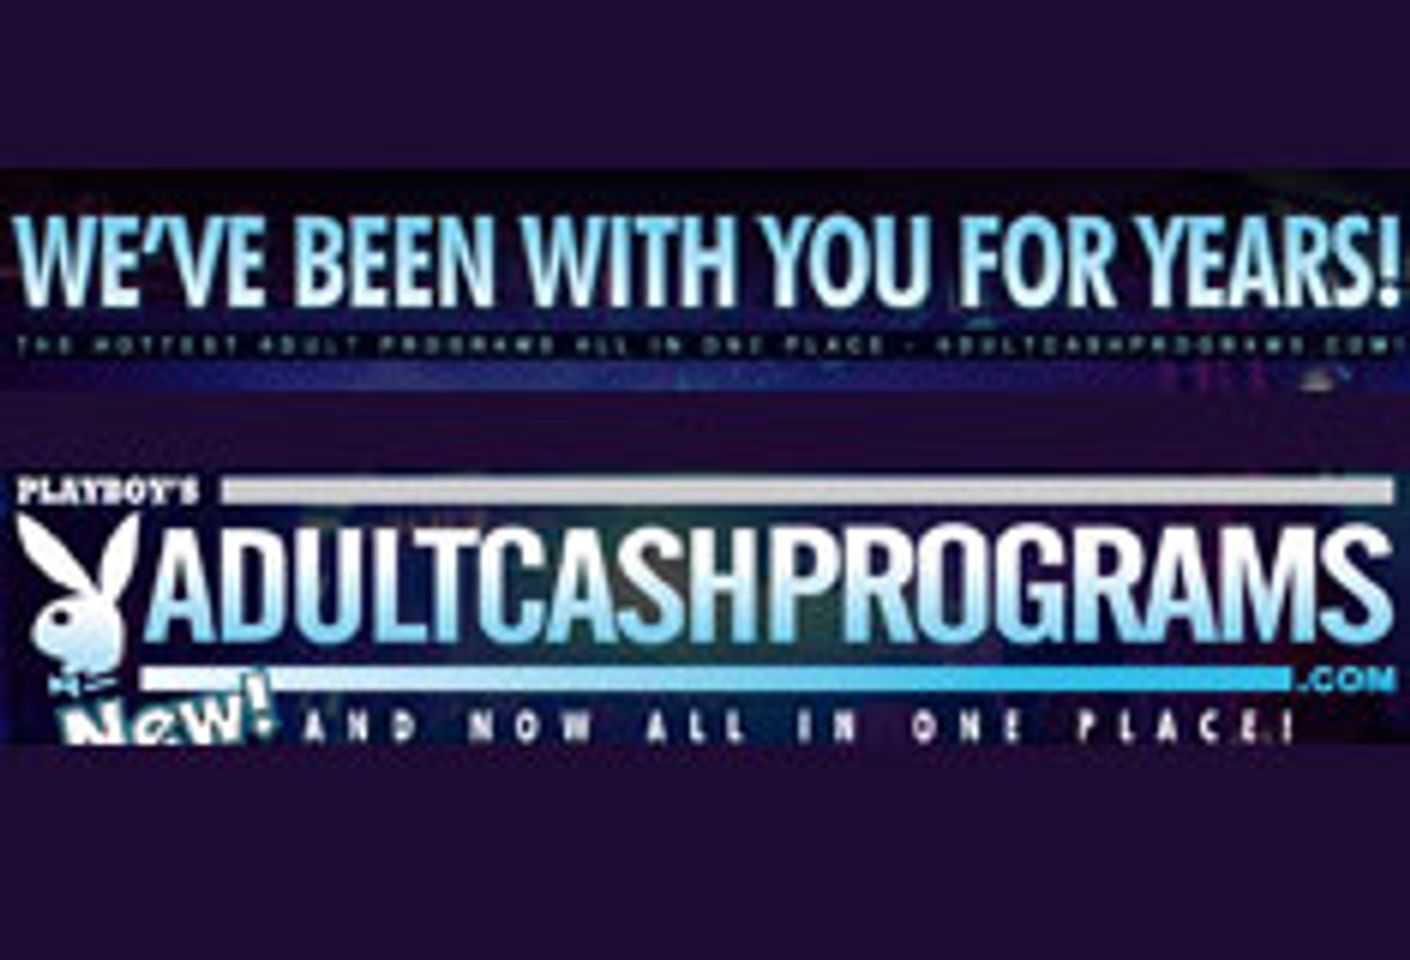 AdultCashPrograms Announces February Big Pay Days Affiliate Promo